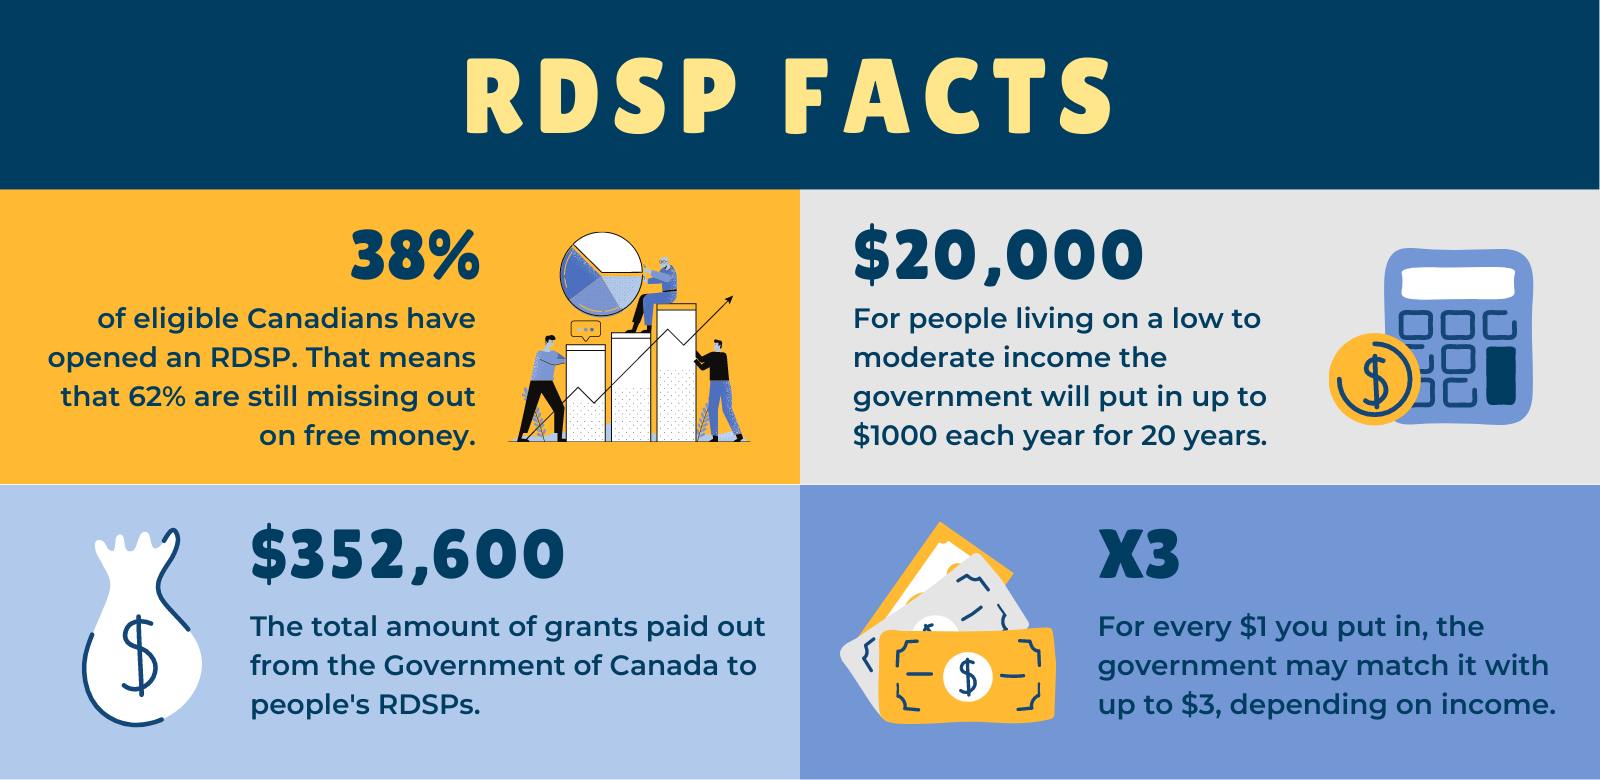 RSDP facts